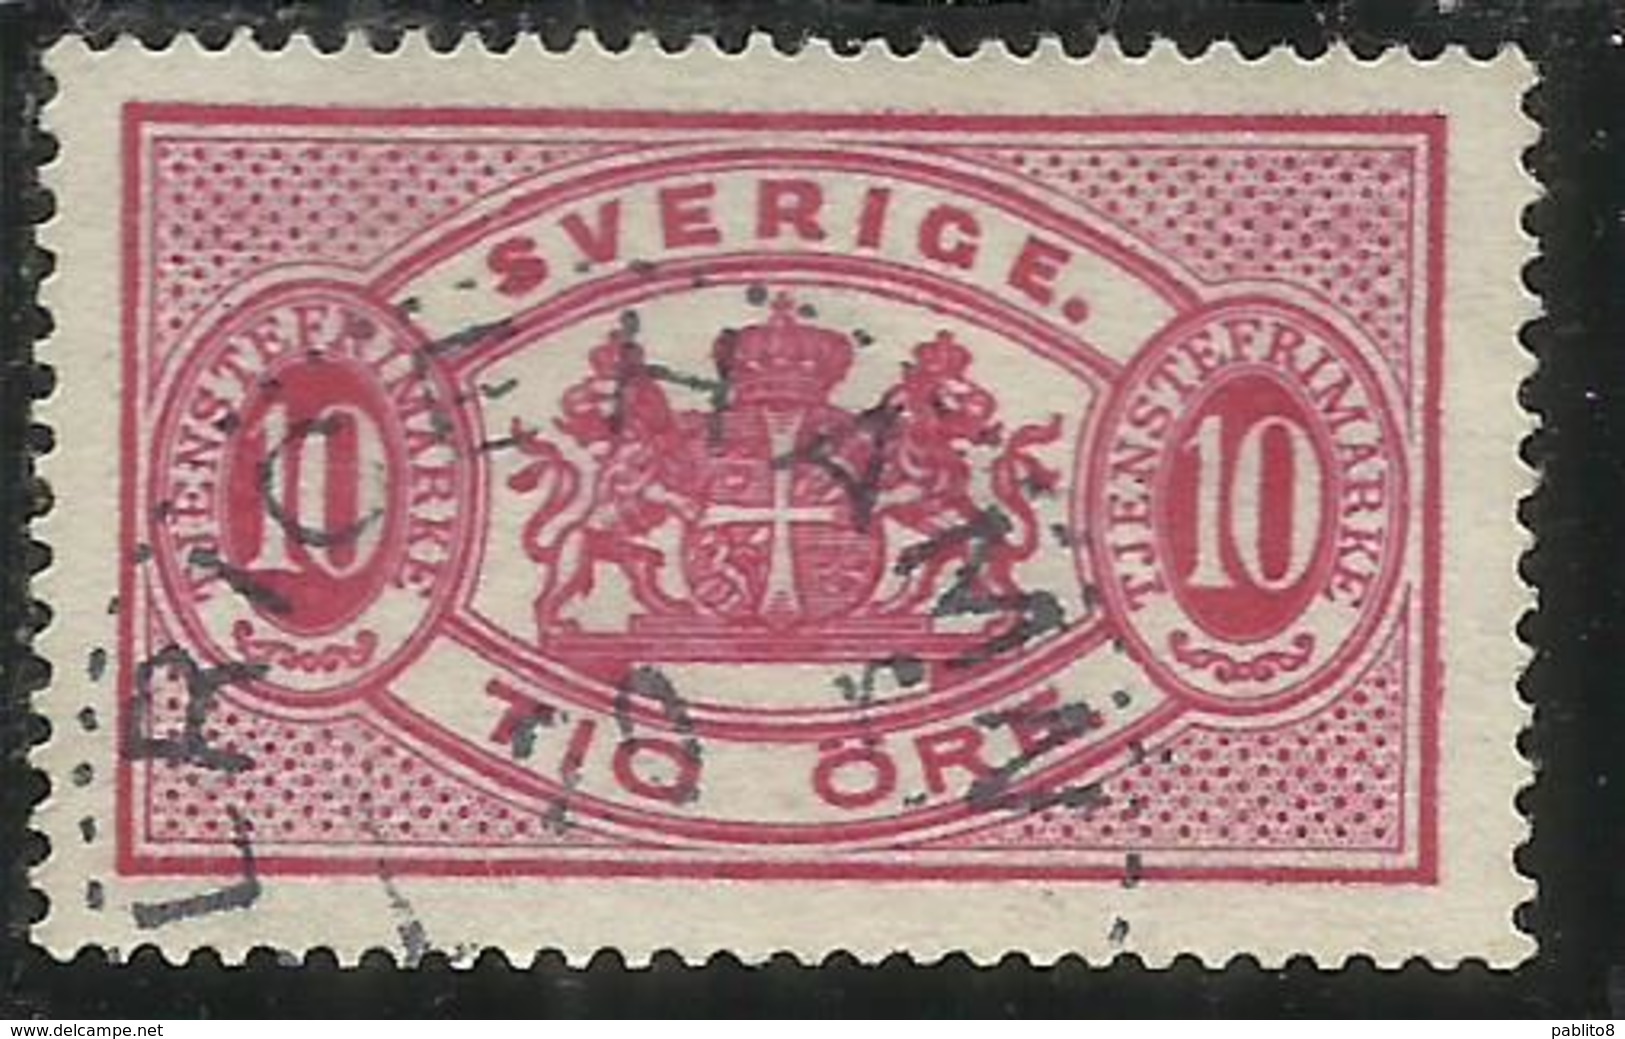 SWEDEN SVERIGE SVEZIA SUEDE 1881 1895 OFFICIAL STAMPS ORE 10o USATO USED OBLITERE' - Steuermarken